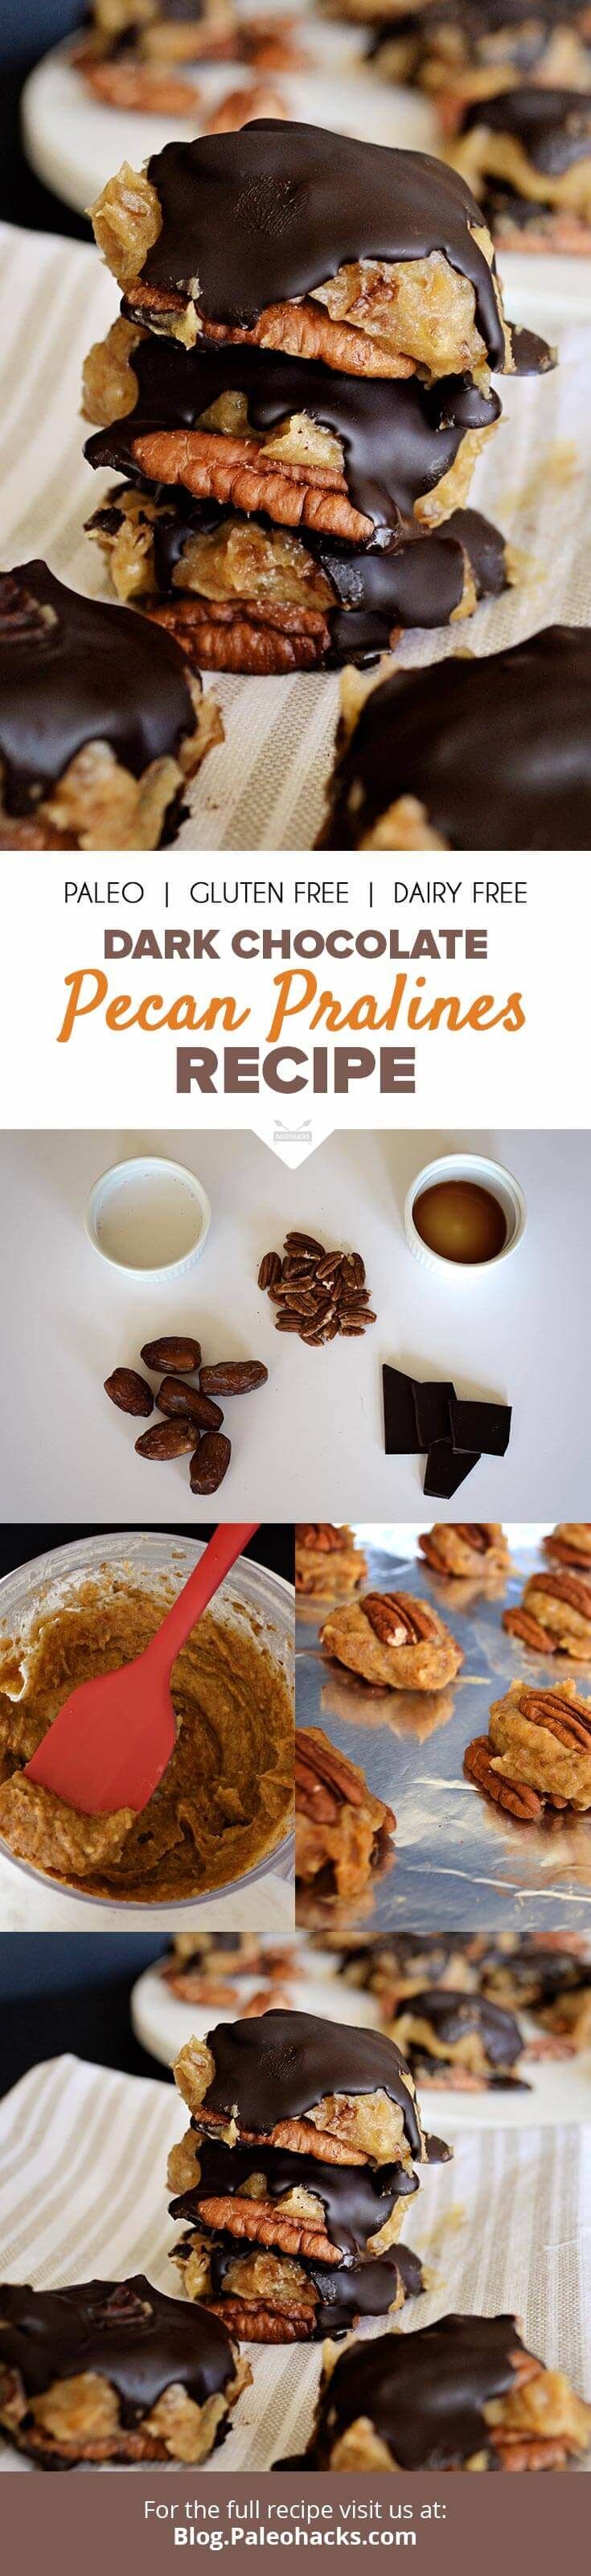 pecan pralines recipes